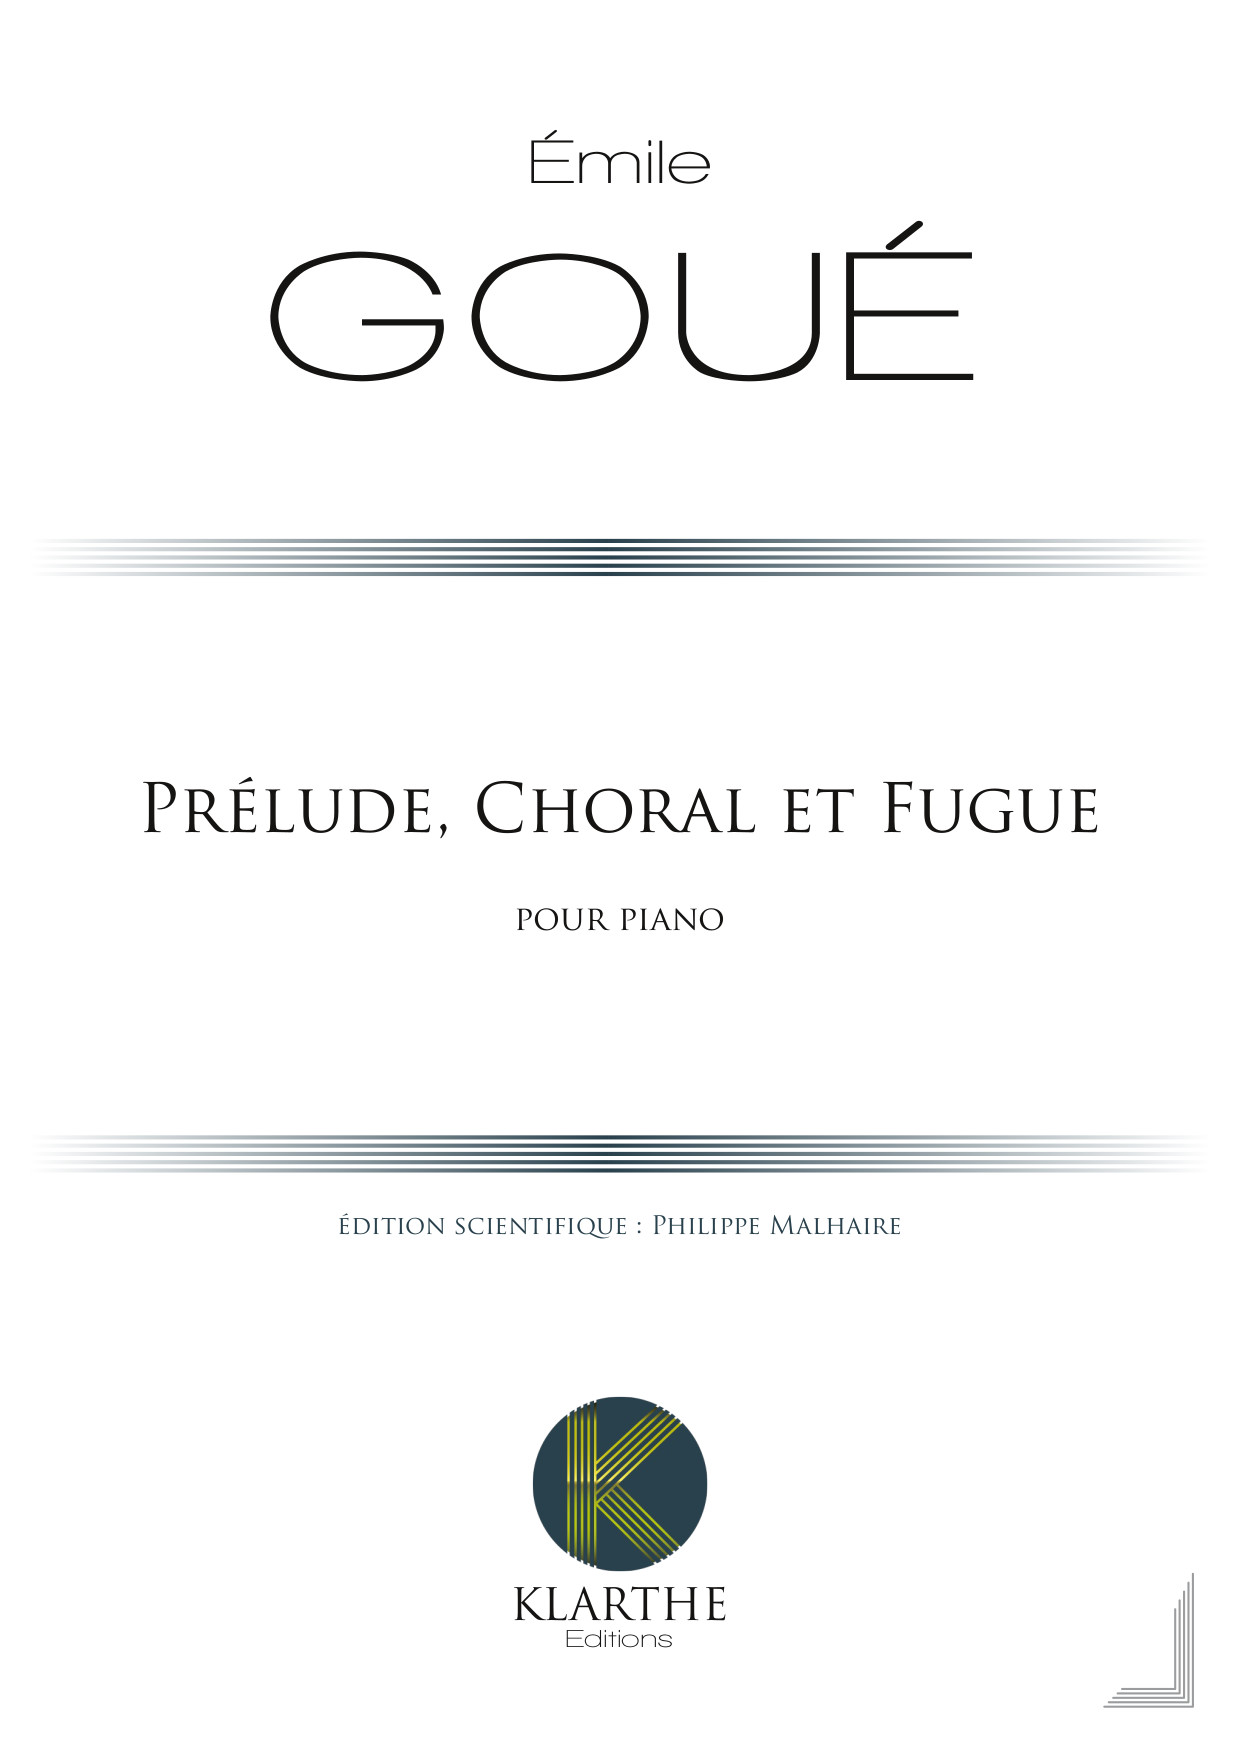 Pr�lude Choral et Fugue (GOUE EMILE)